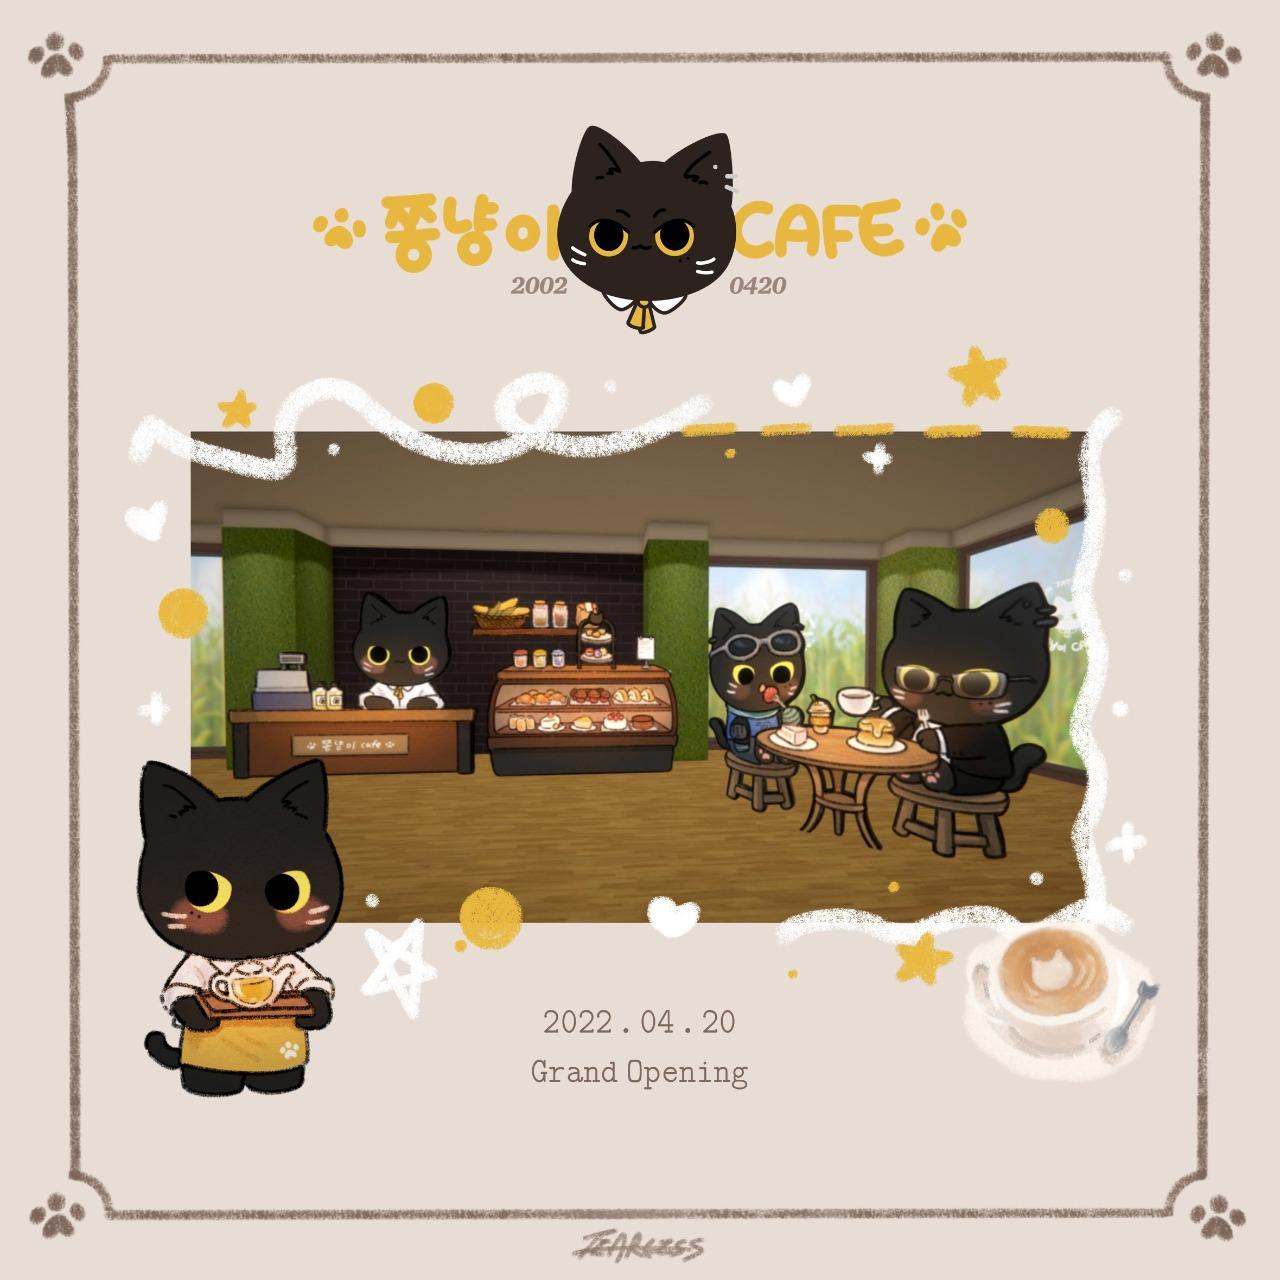 FEARLESS 쫑냥이 ᗢ Café